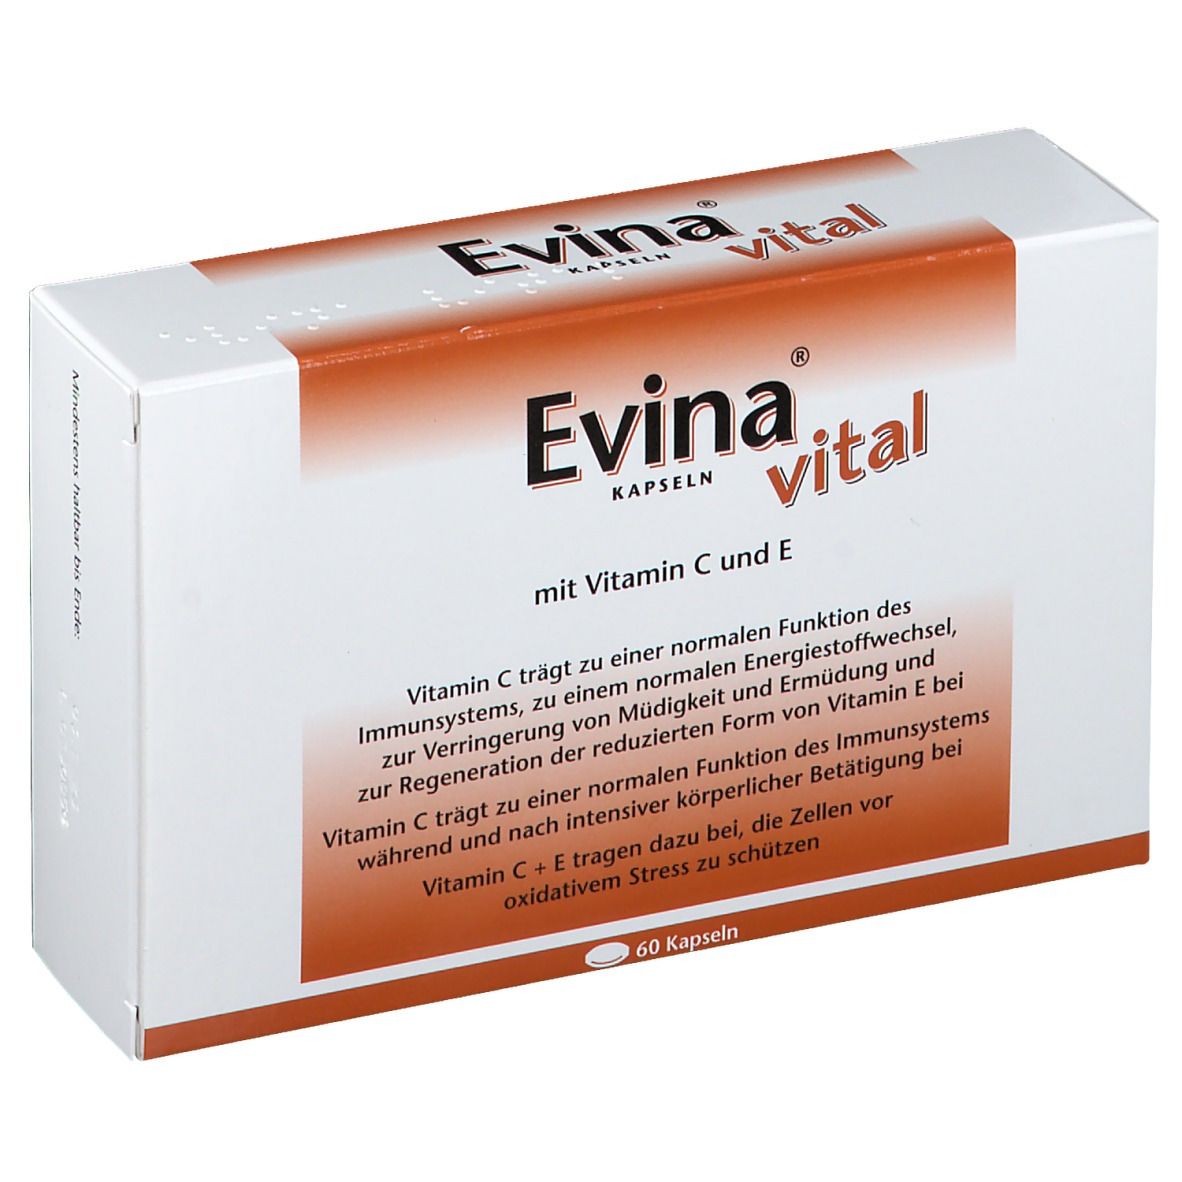 Image of Evina® vital